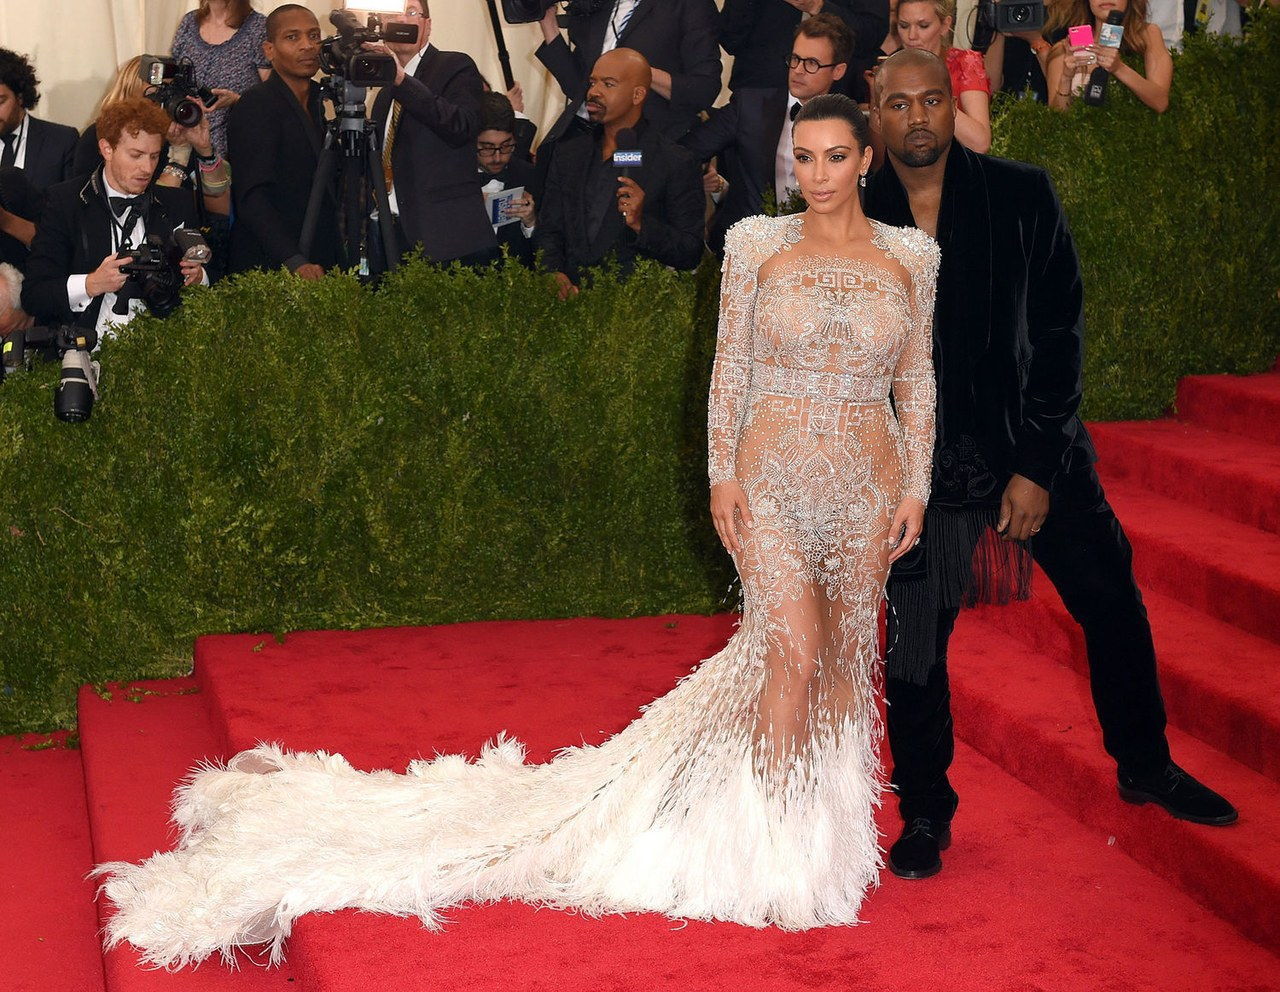 كيم kardashian white sheer feather dress met gala 2015